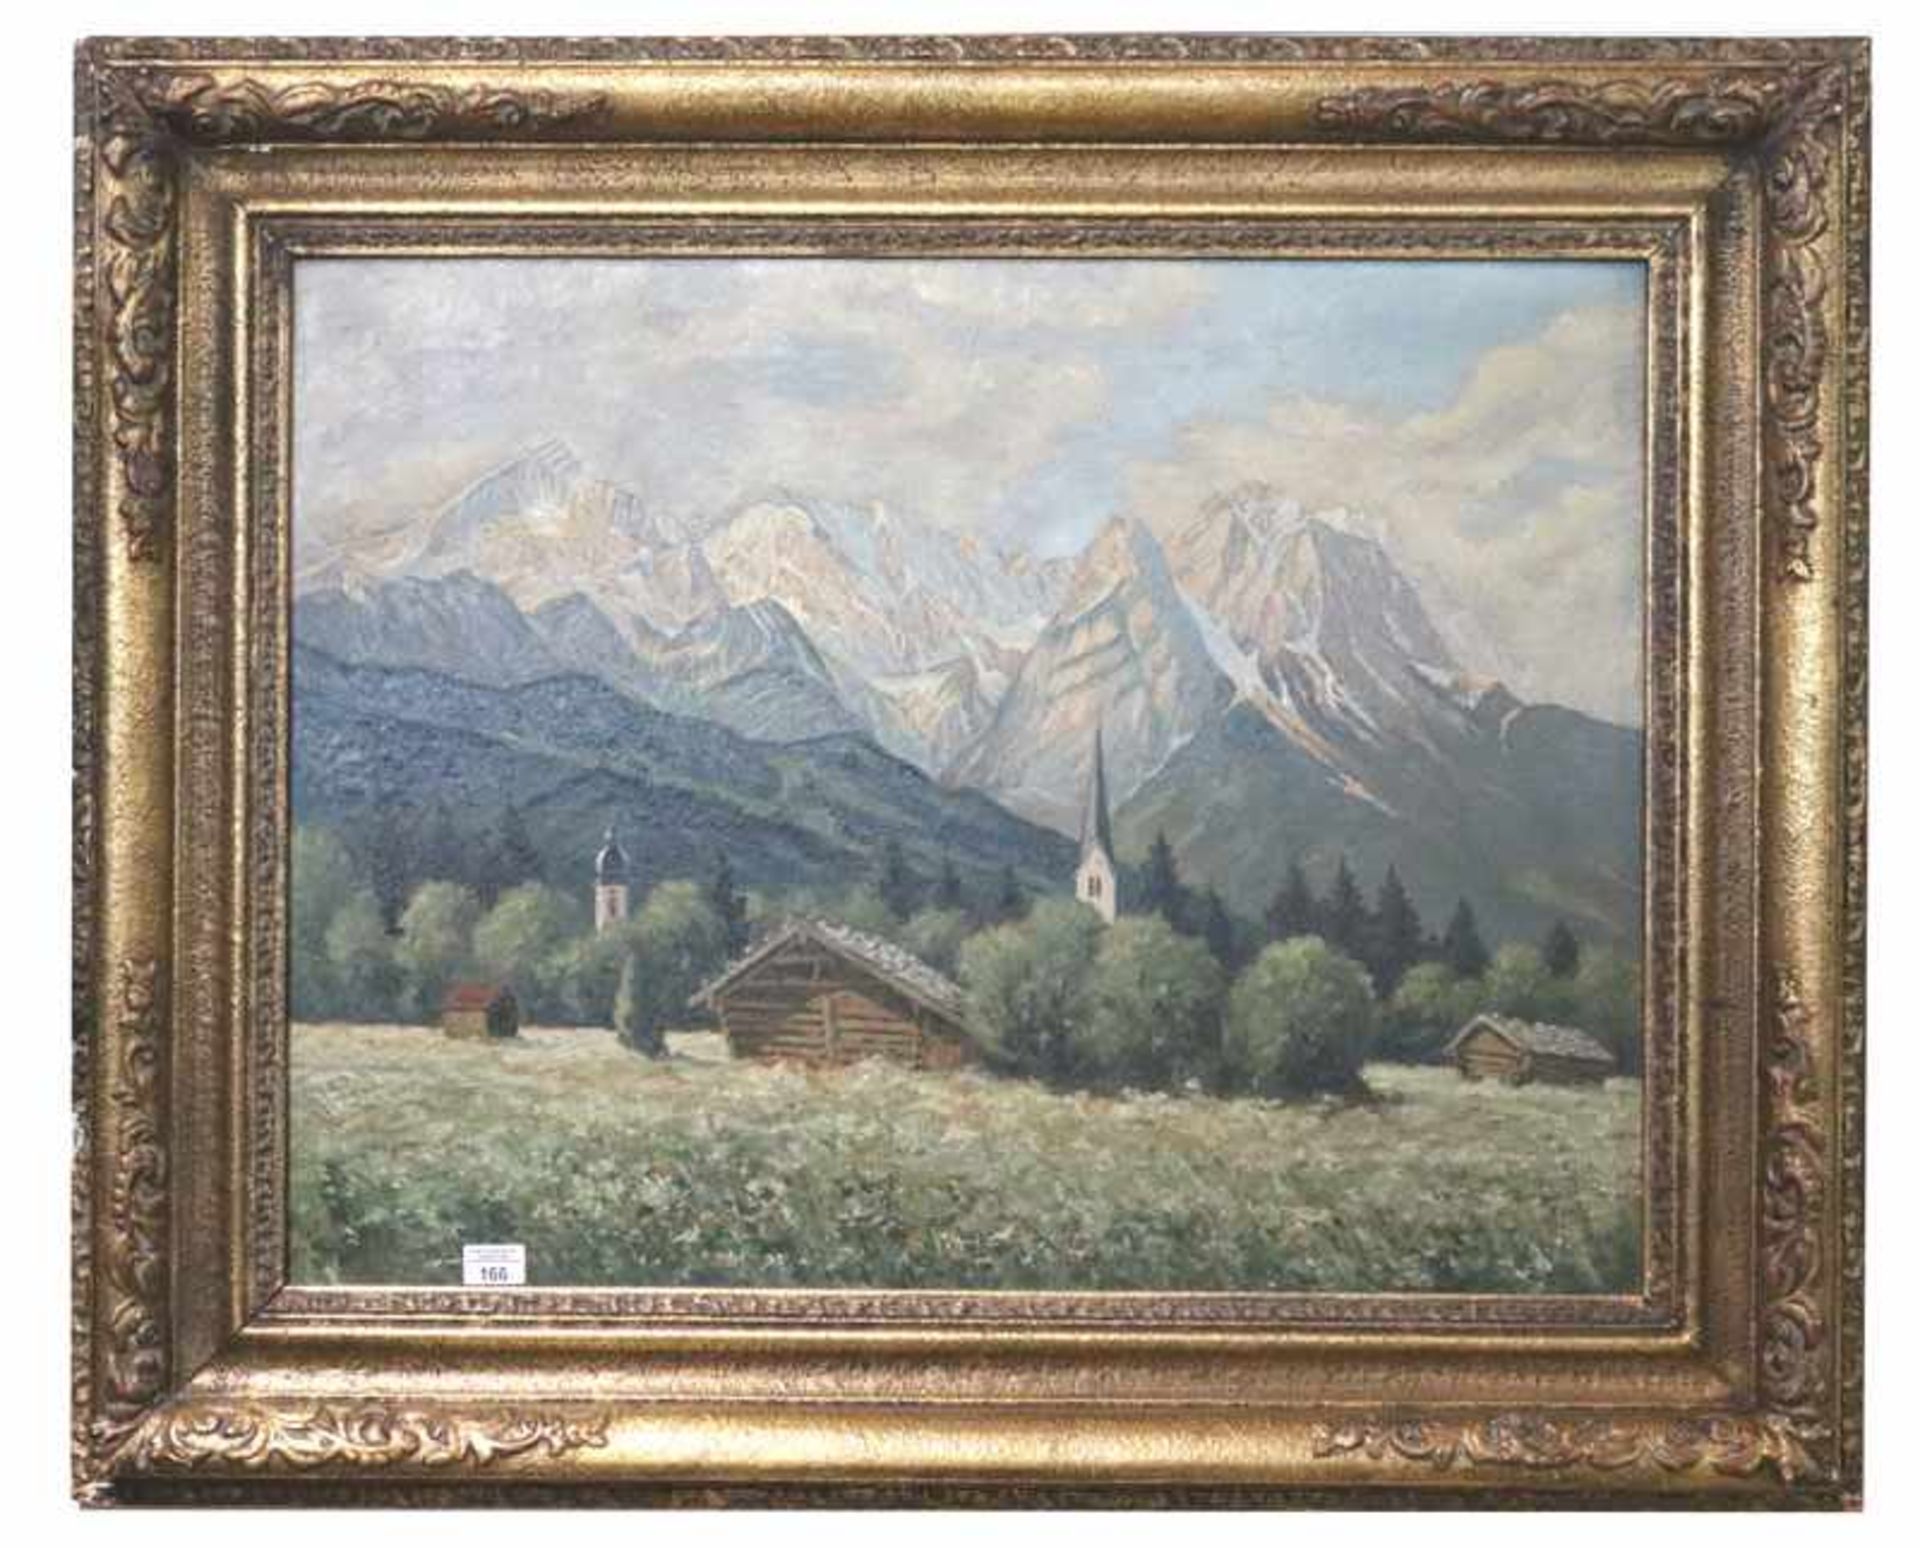 Gemälde ÖL/LW 'Frühjahr im Wettersteingebirge', signiert Jakob Hellmann, * 1877 Homburg/ Saar + 1953